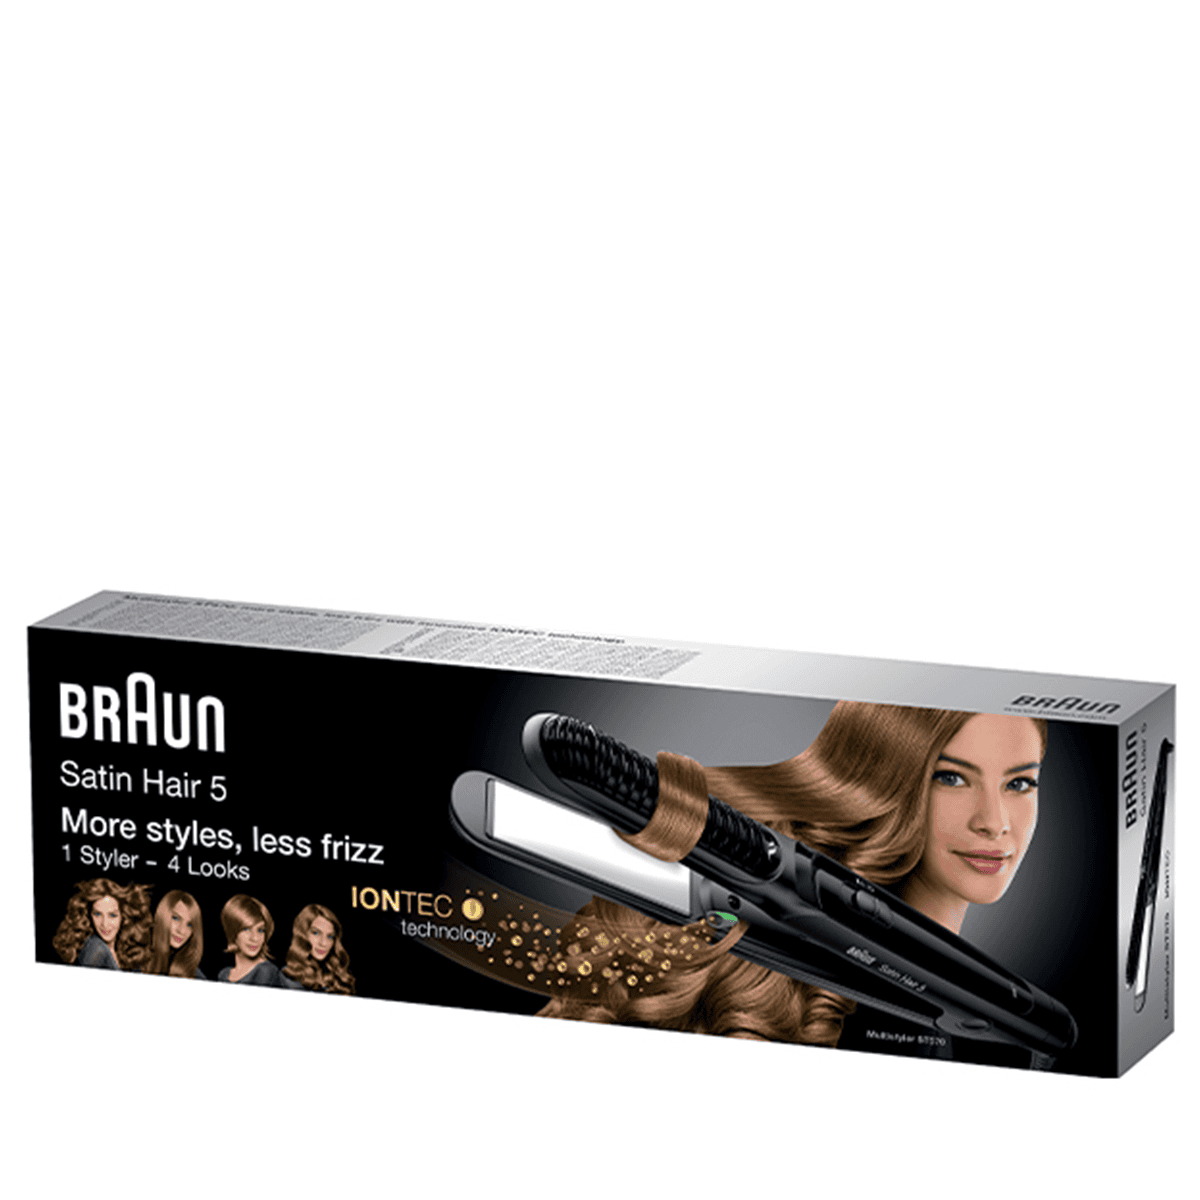 Braun - Satin Hair 5 Straightener • Iontec